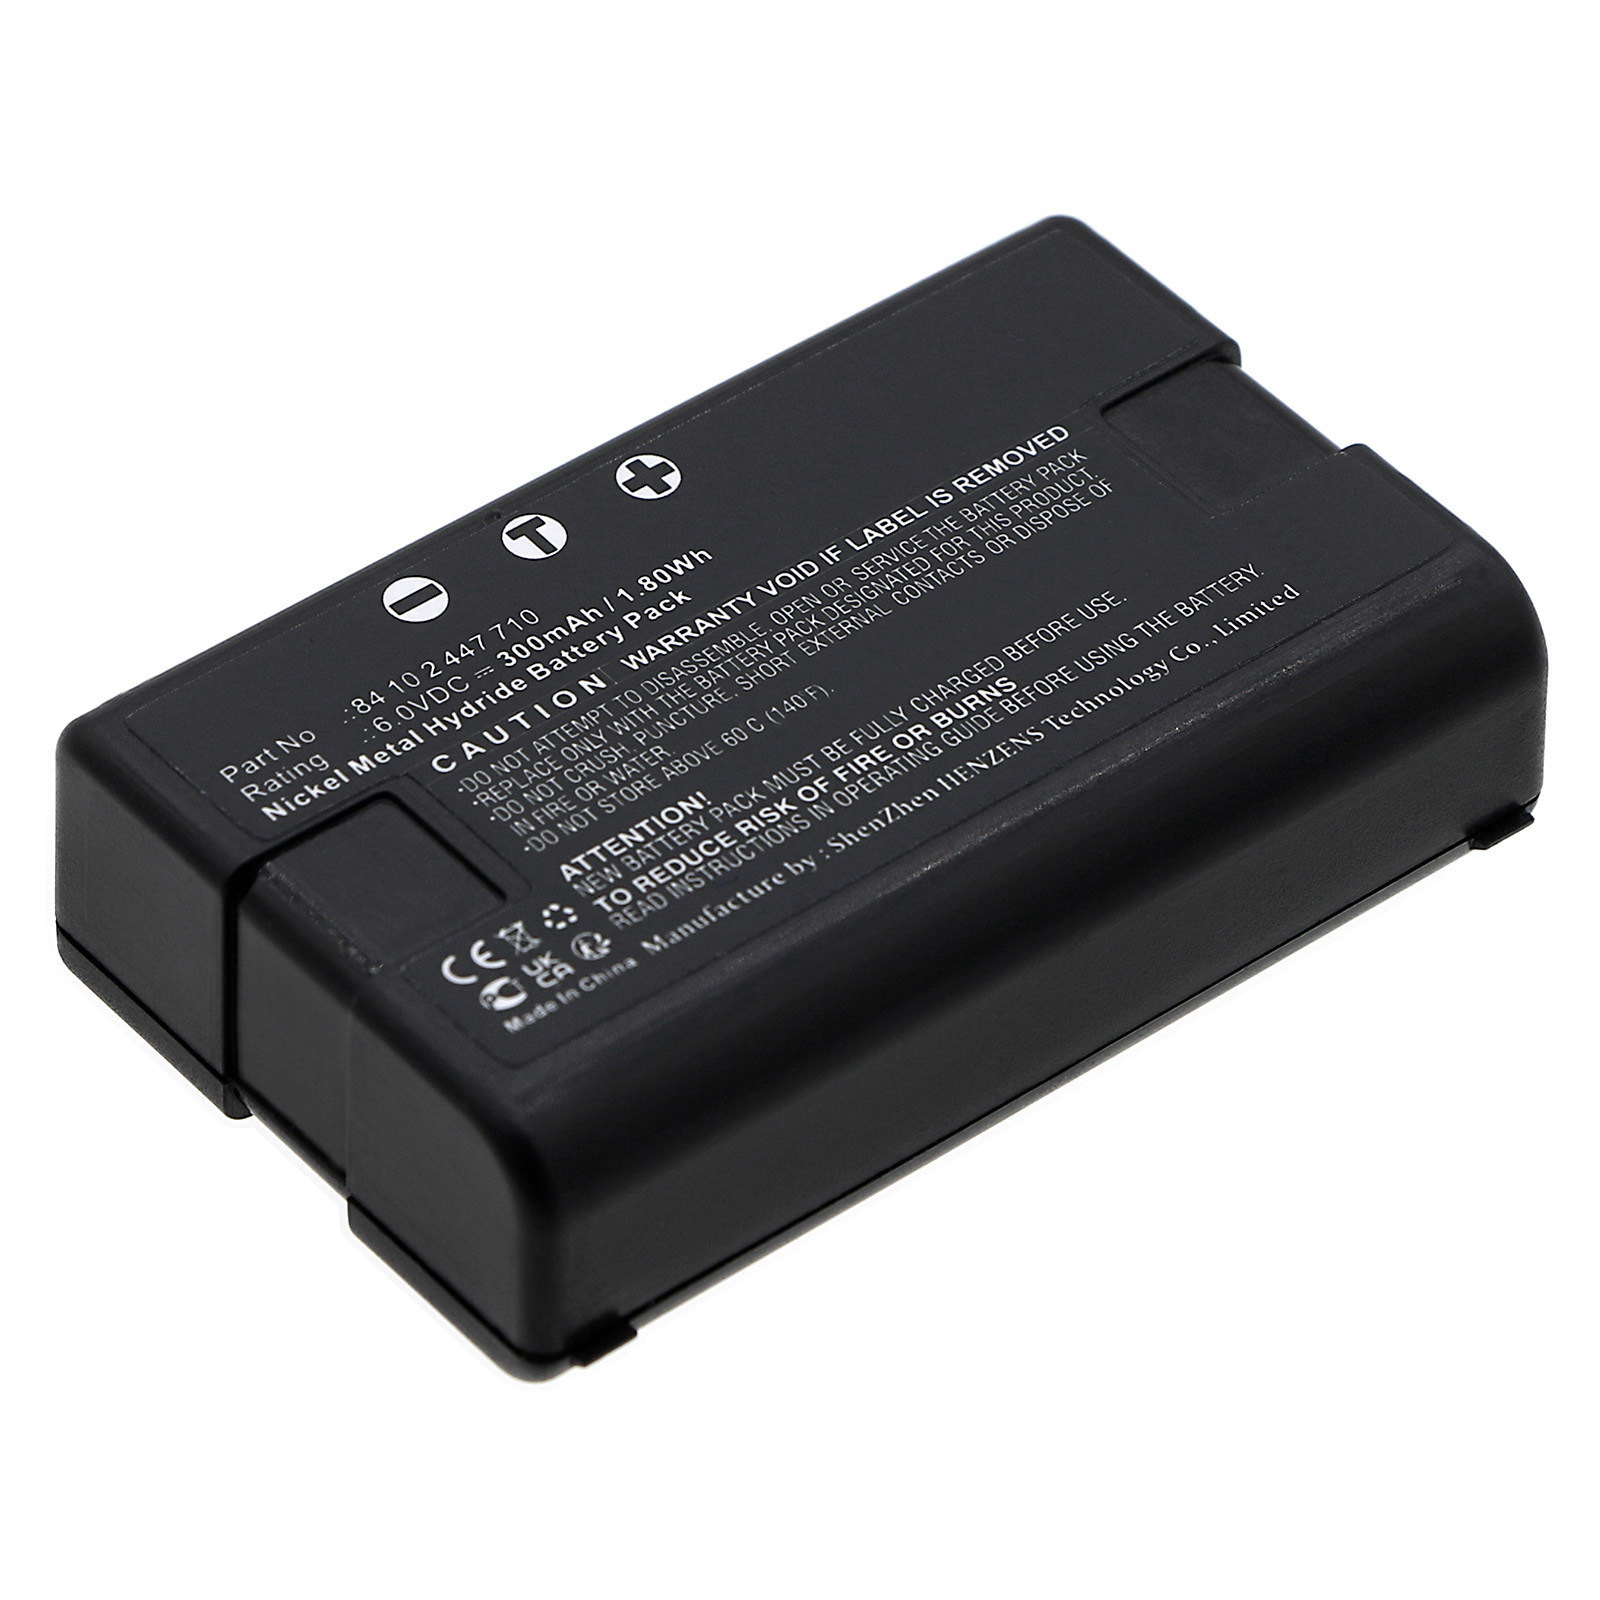 Synergy Digital Siren Alarm Battery, Compatible with BMW 2 447 710-01 Siren Alarm Battery (Ni-MH, 6V, 300mAh)